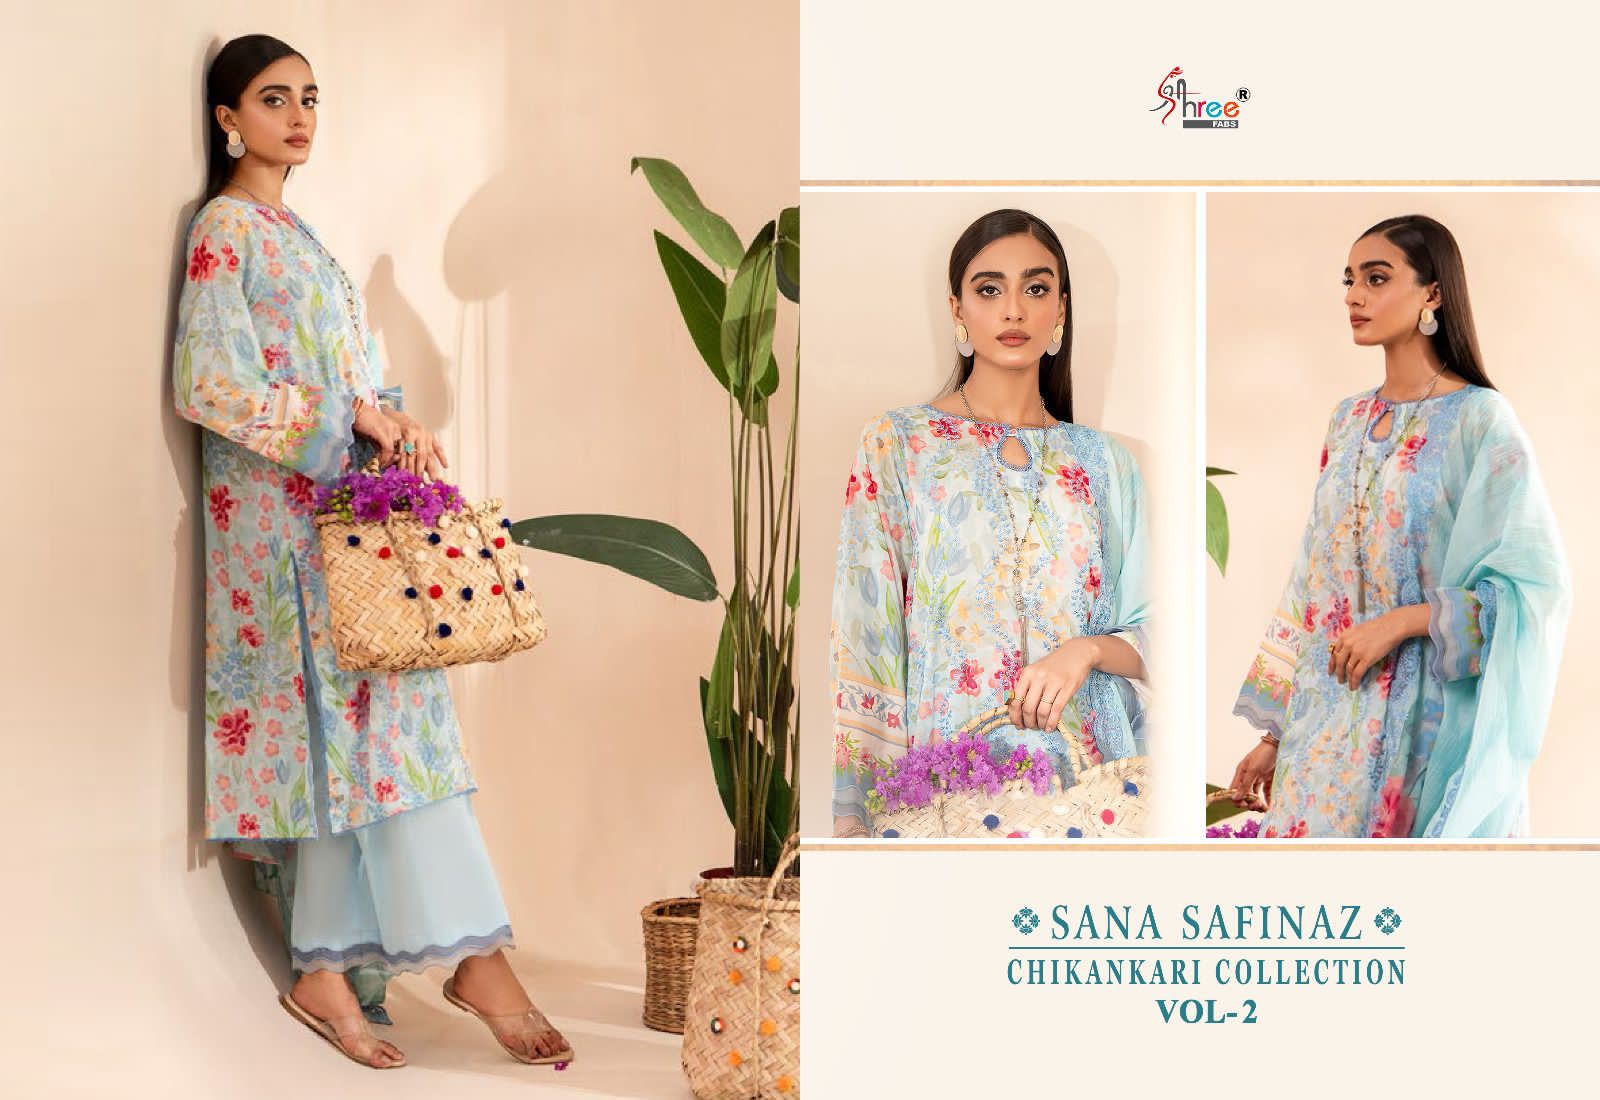 Shree fabs sana safinaz chikankari collection vol 2 cotton with embroidery work Cotton dupatta pakistani salwar suits wholesaler - jilaniwholesalesuit